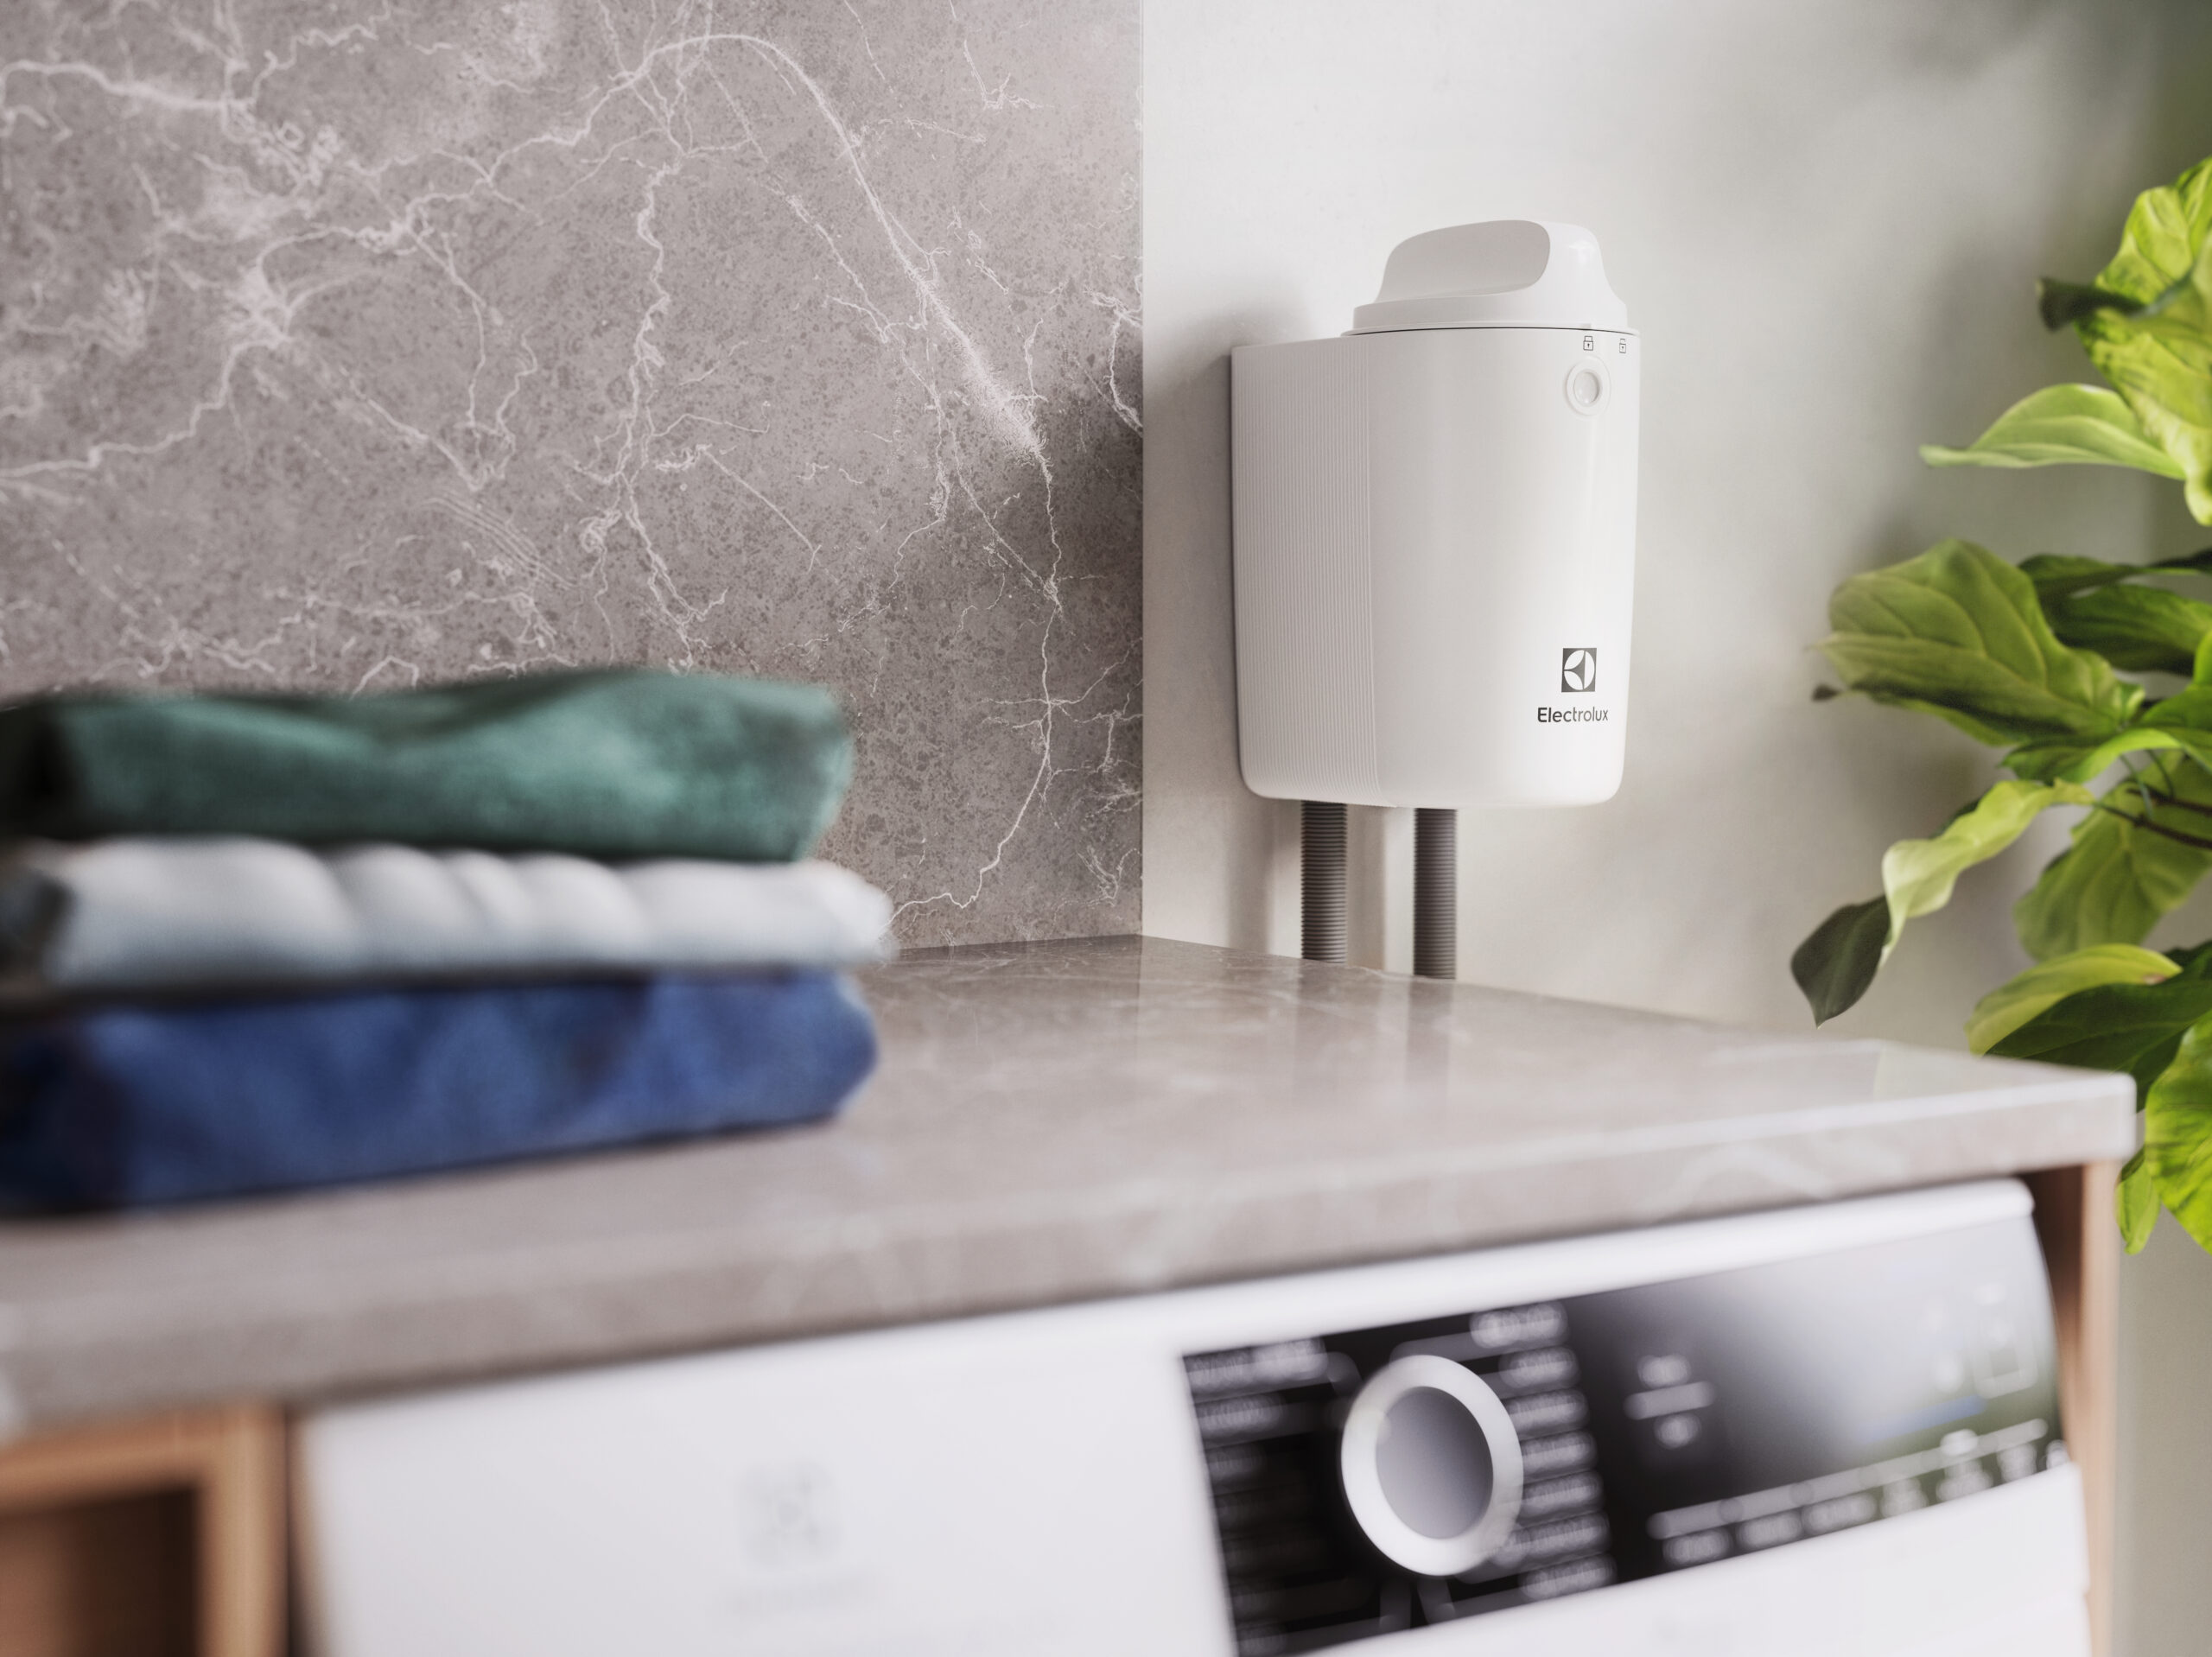 Natural Bathroom : Washing machine filter that reduces microplastics